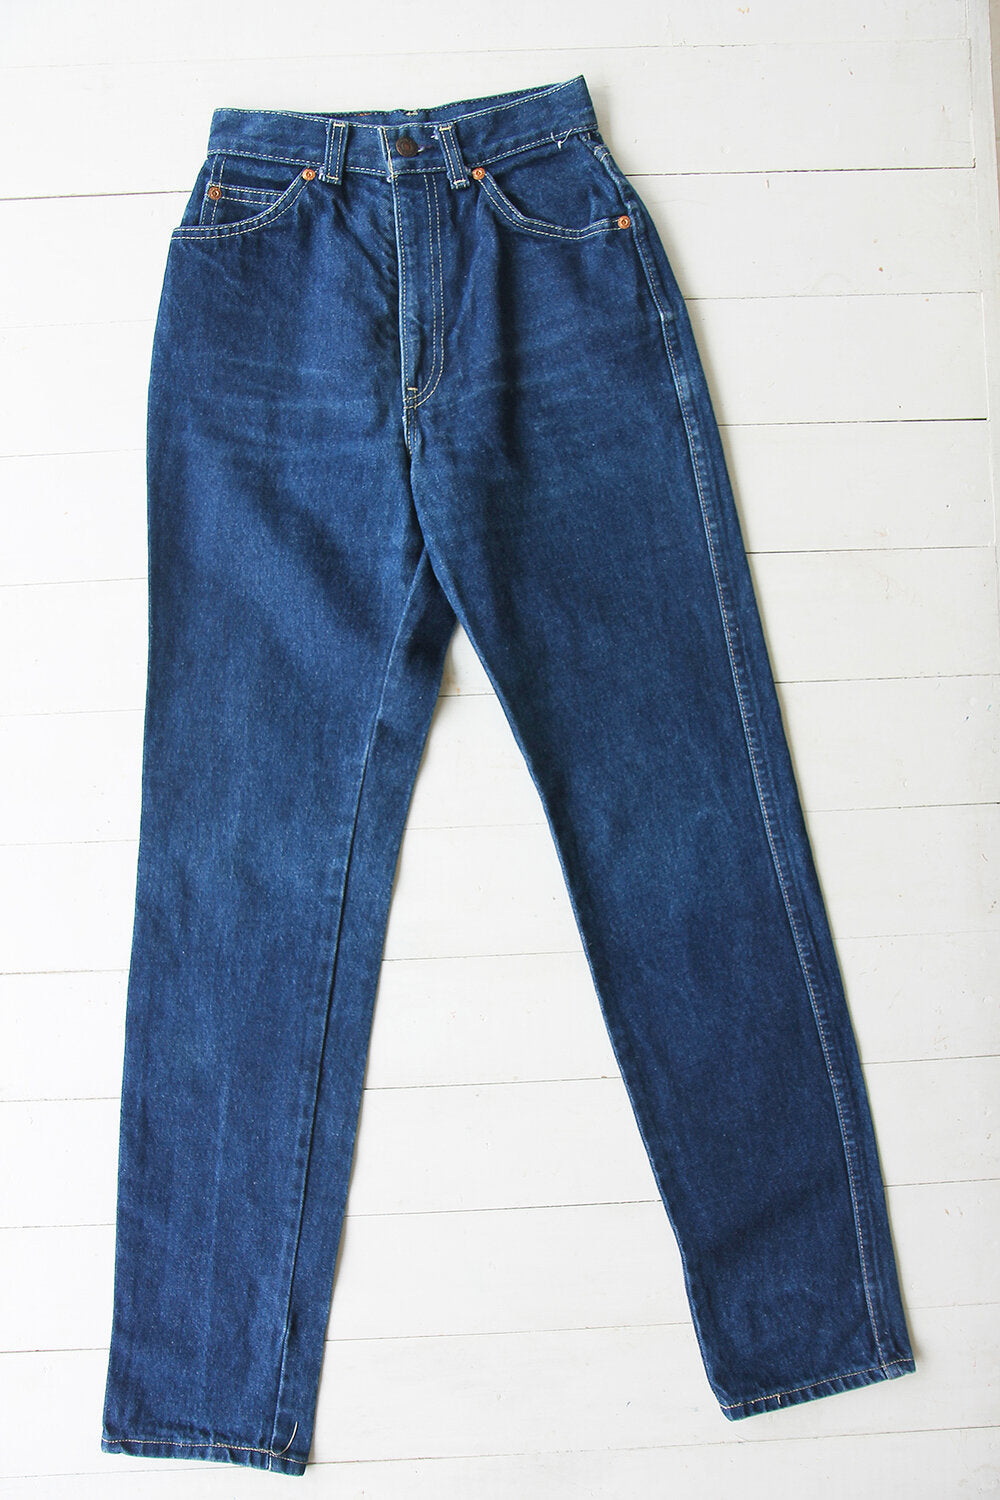 Original Levi's White Tab Dark Blue High Rise 24"(61cm) Mom Jeans